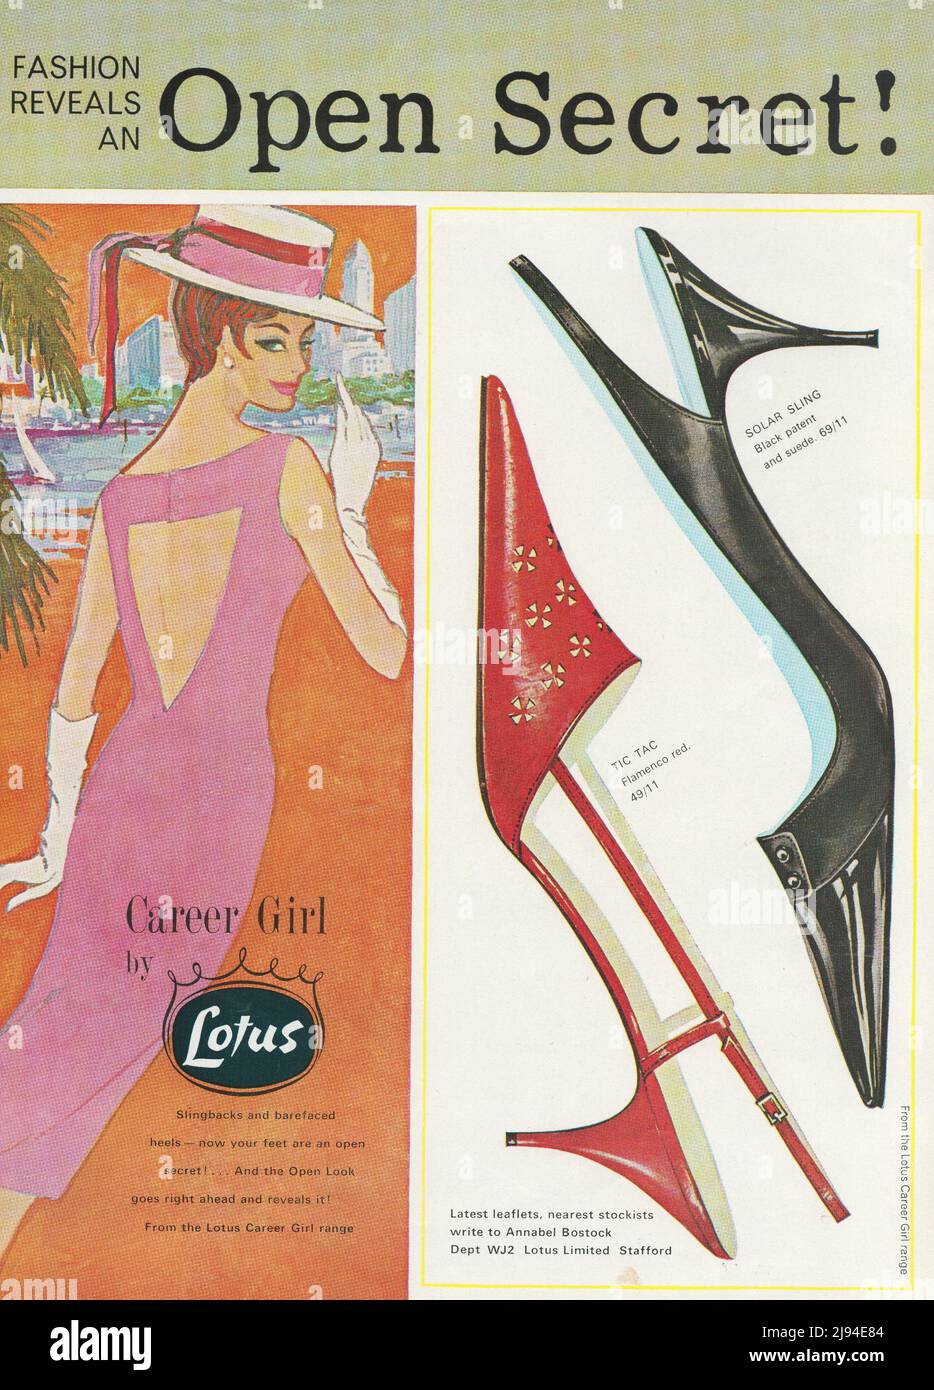 Career Girl by Lotus Lotus ladies shoes vintage paper advertisement advert 1980s 1970s Stock Photo